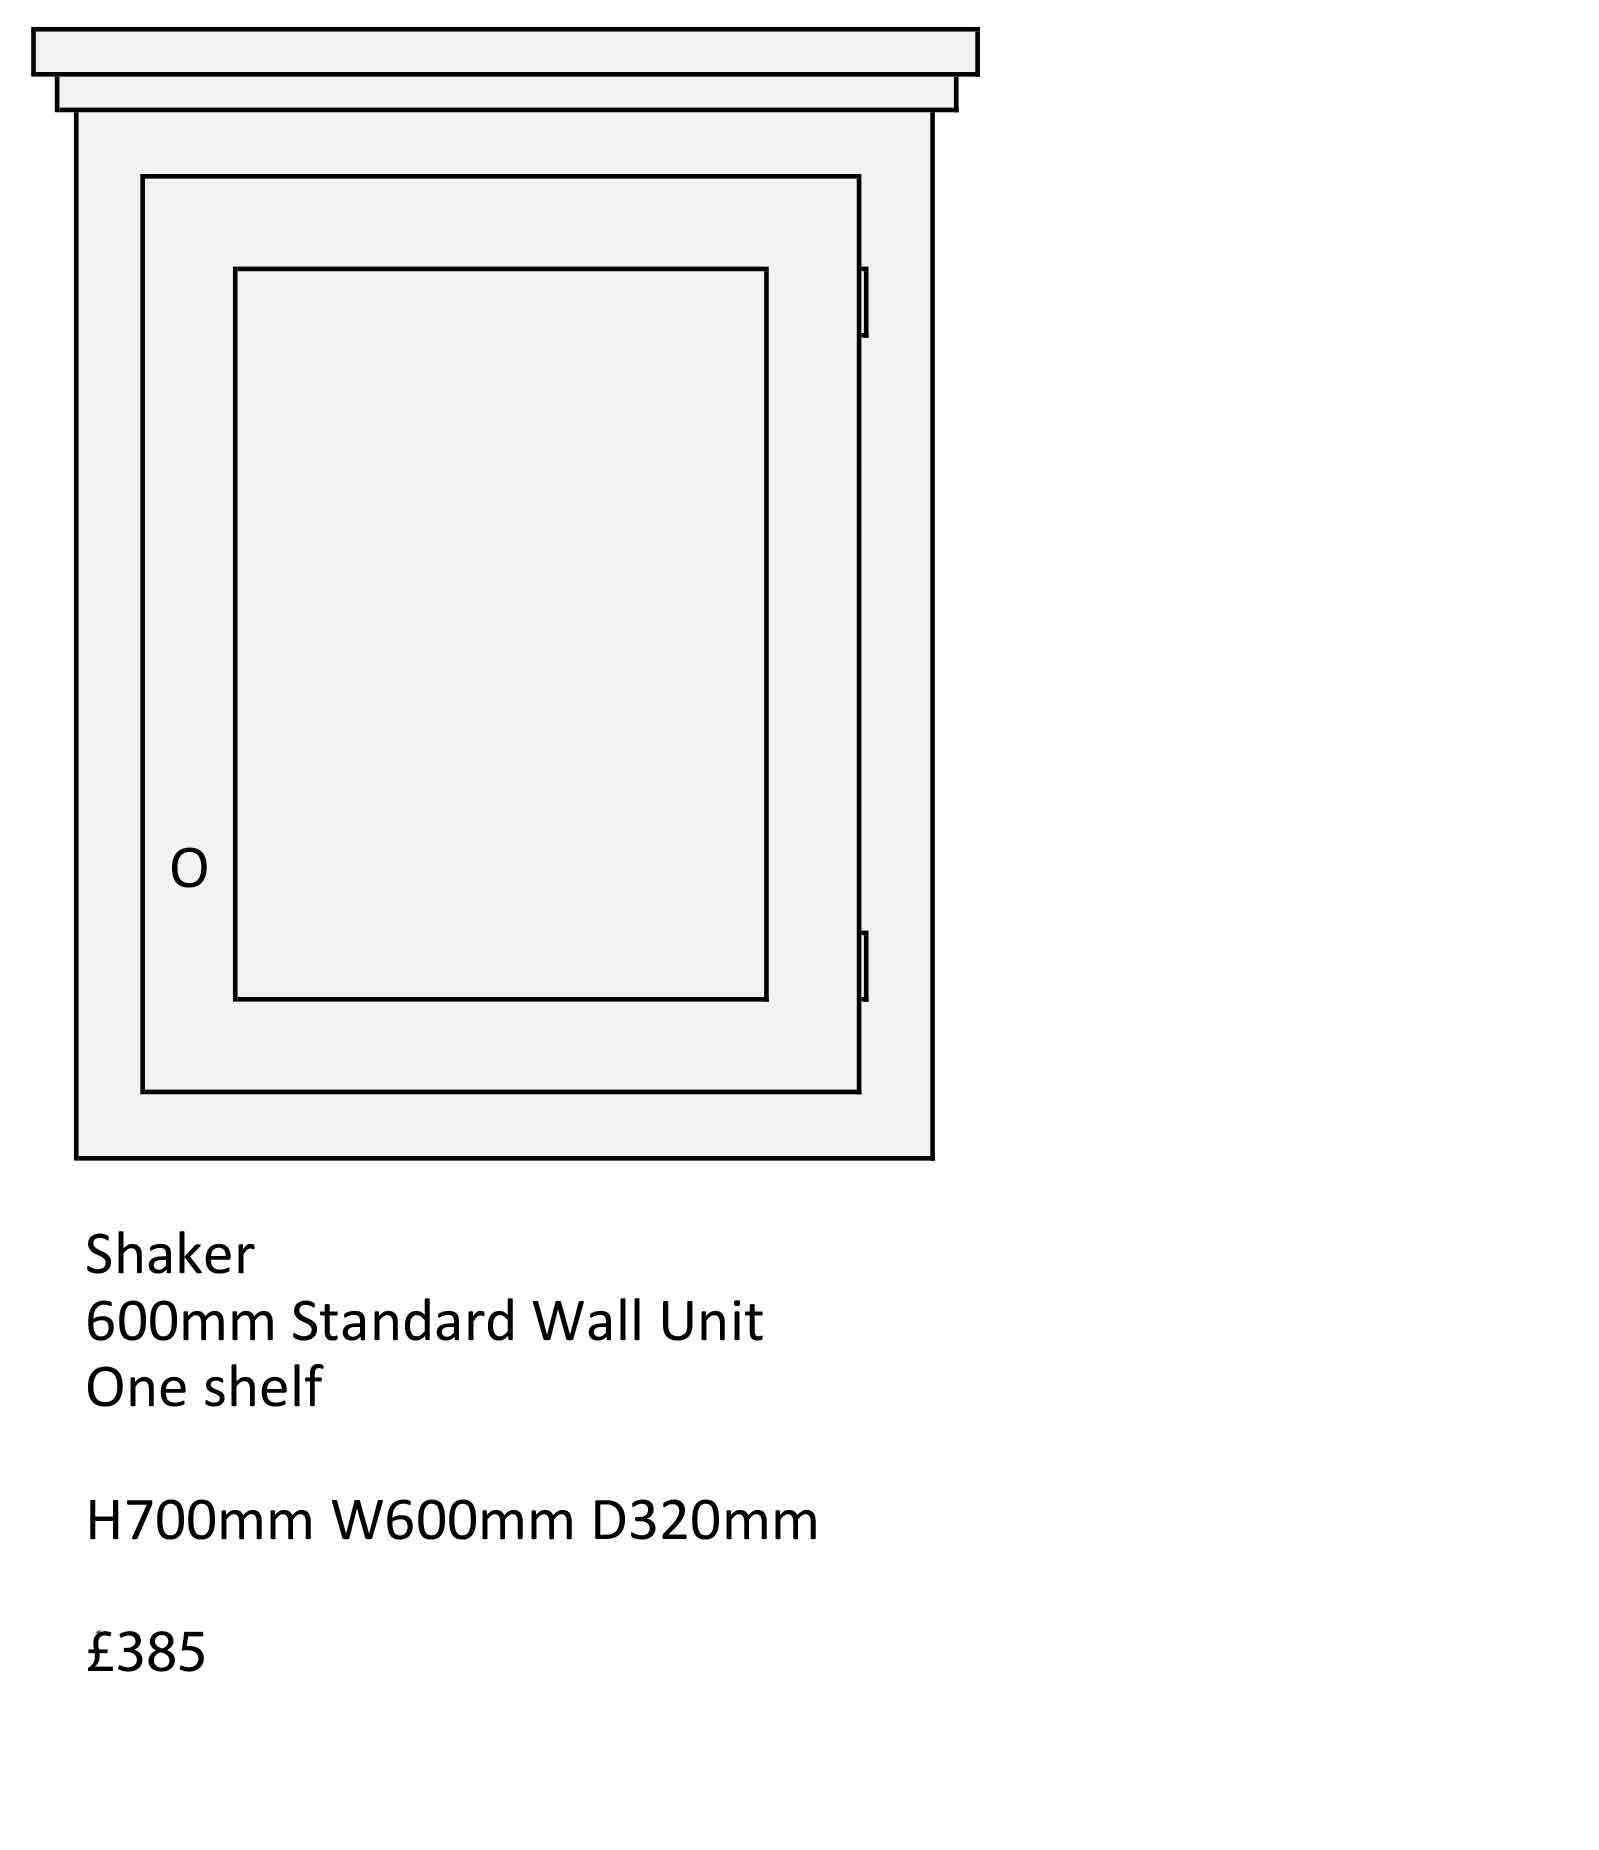 Shaker style kitchen wall unit, standard wall unit 600mm with one shelf. Solid wood, oak Kitchen units from The Bramble Tree